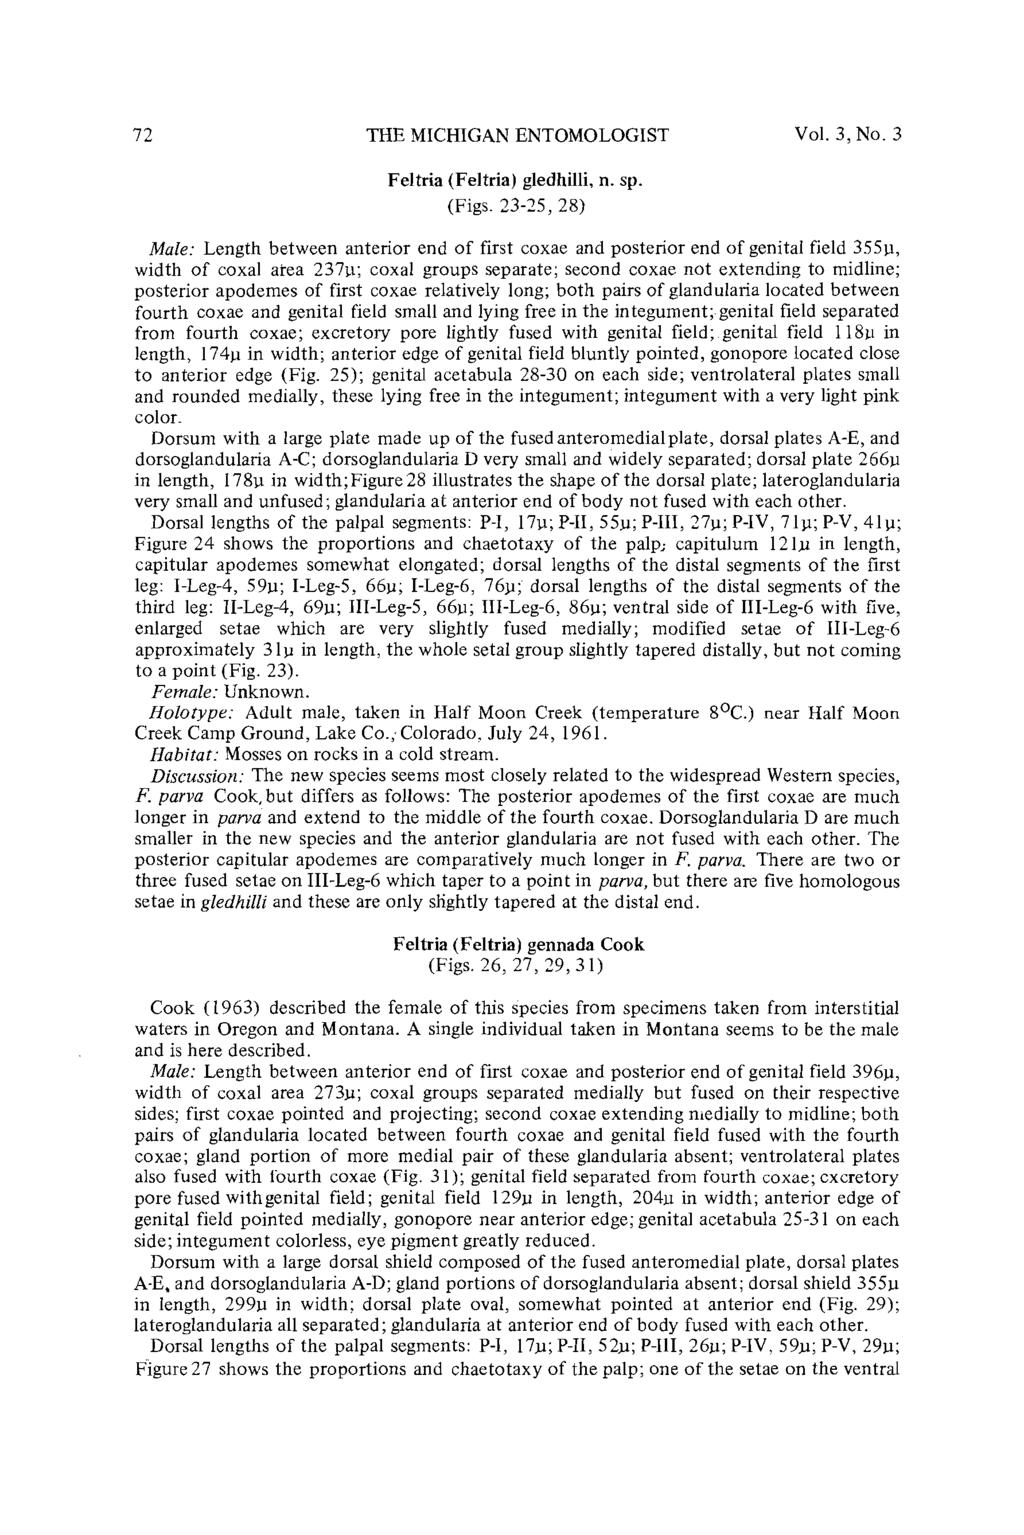 THE MICHIGAN ENTOMOLOGIST Vol. 3, No. 3 Feltria (Feltria) gledhilli, n. sp. (Figs.